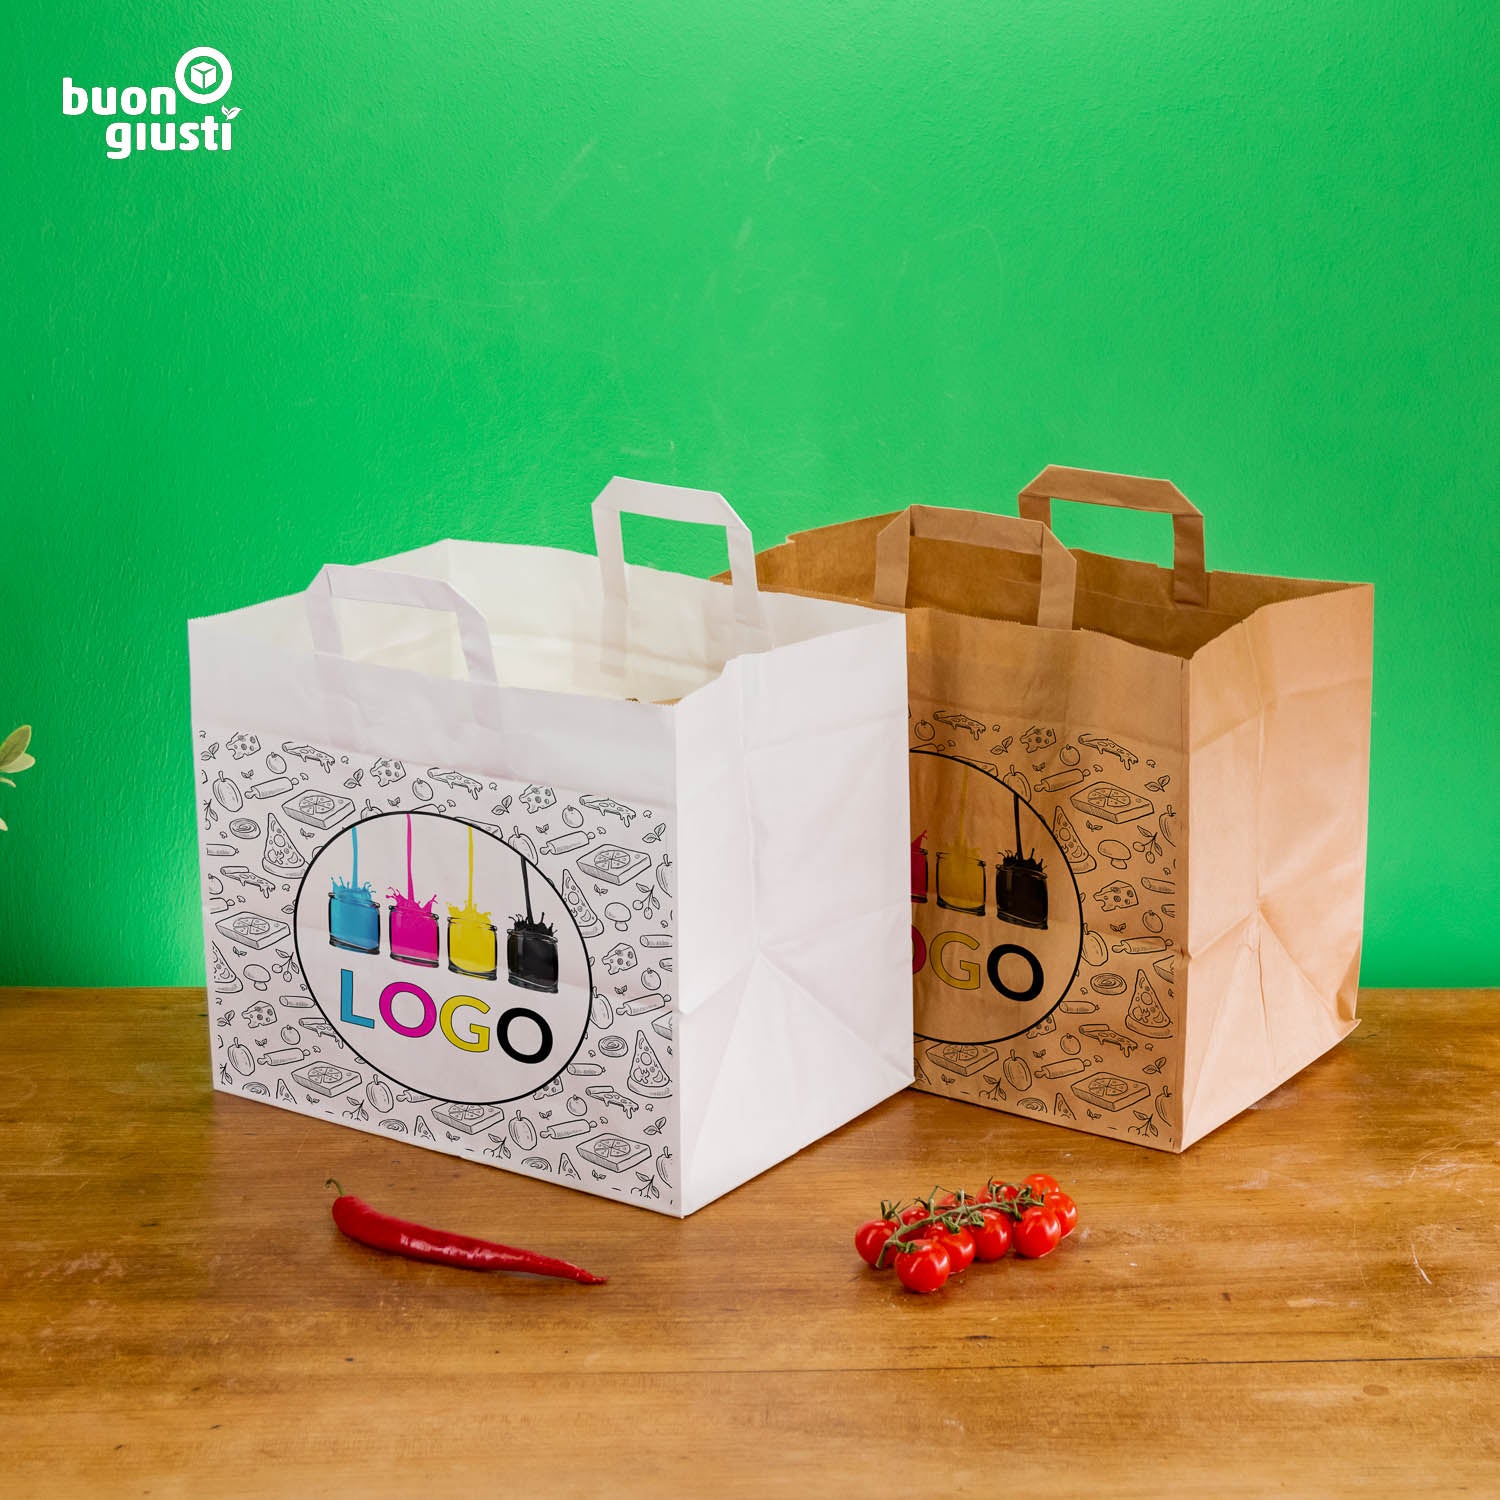 Digital printing Personalized  32x32x4 cm pizza box - Buongiusti Shop